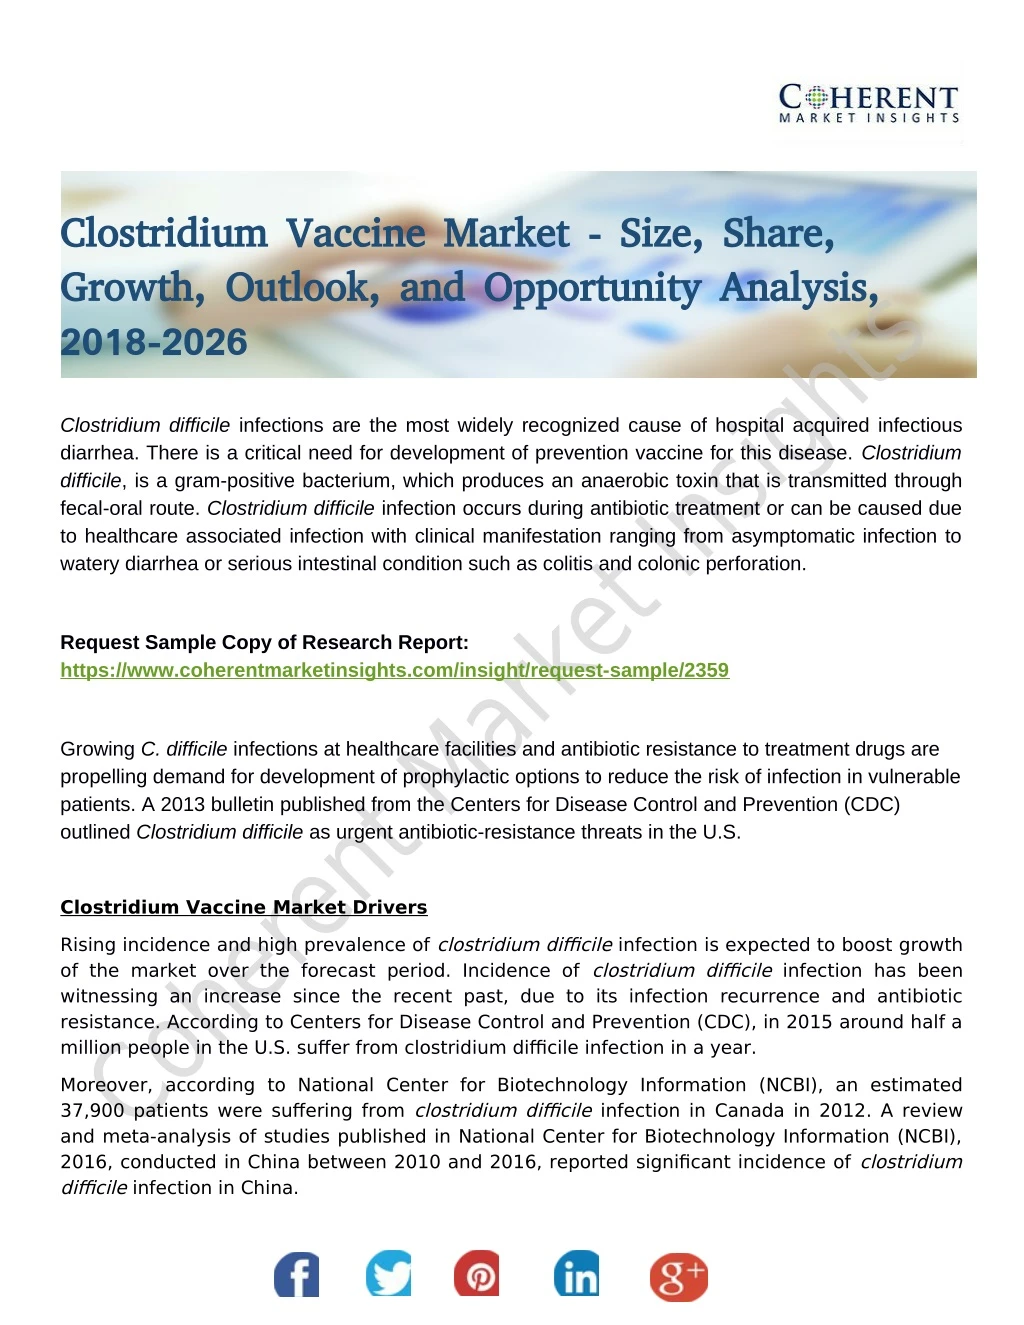 clostridium vaccine market size share clostridium